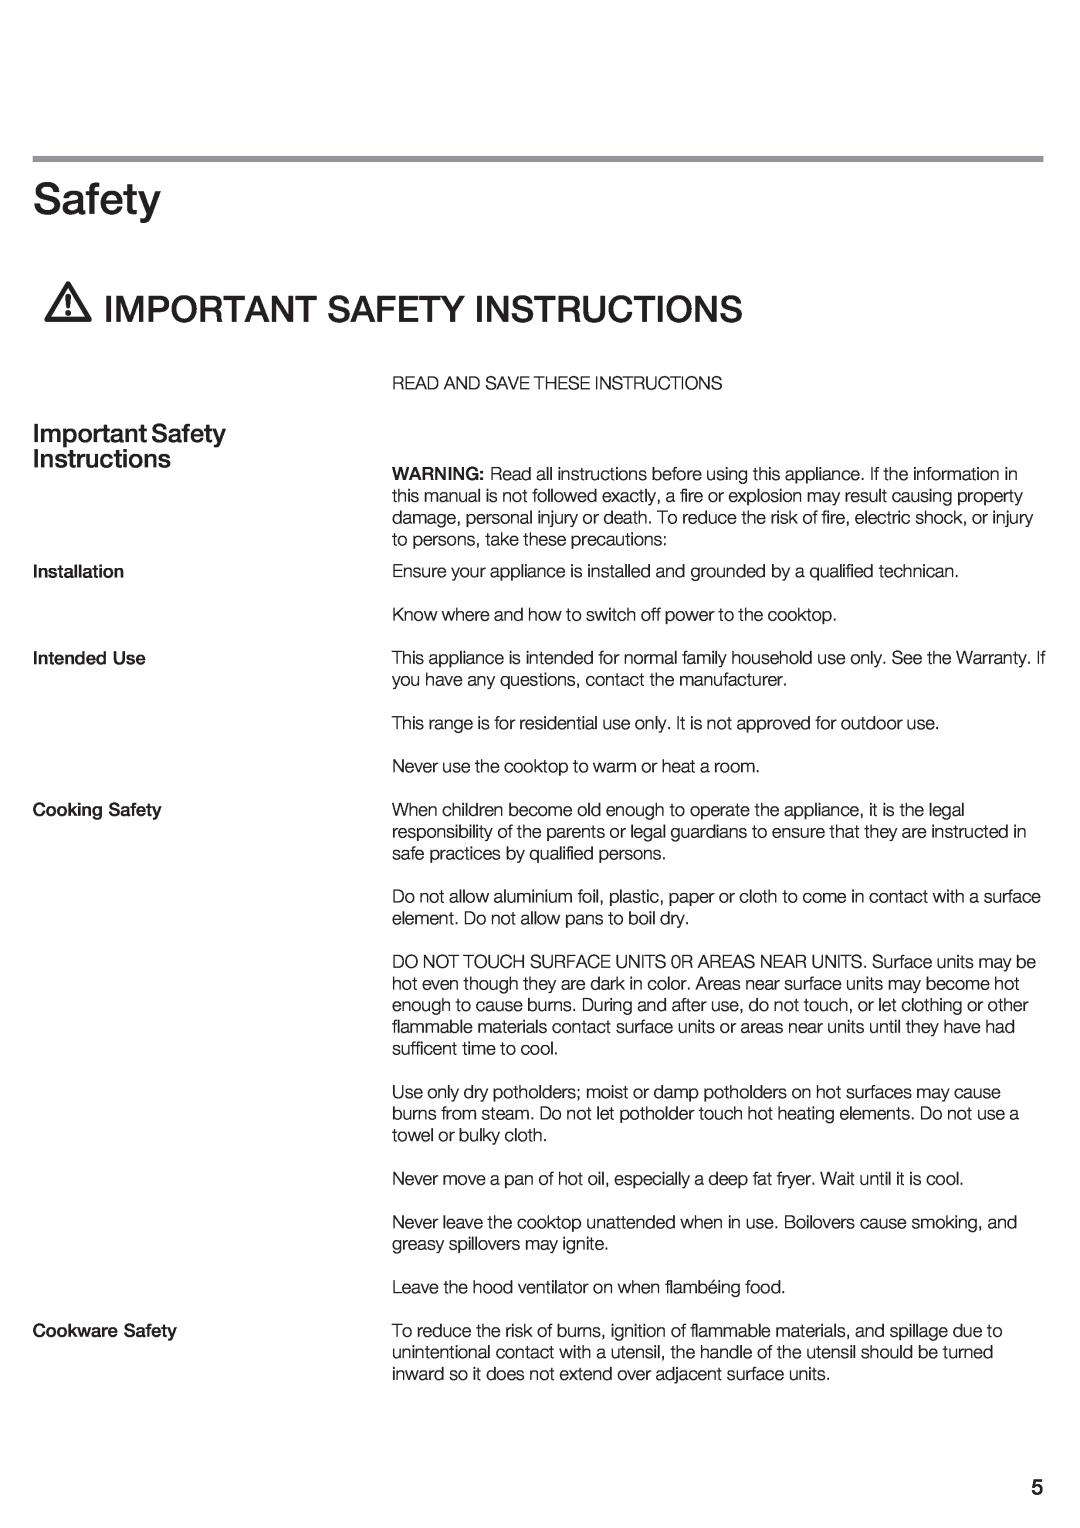 Bosch Appliances NEM 94, NEM 75 Importantsafetyinstructions, Installation Intended Use Cooking Safety, Cookware Safety 